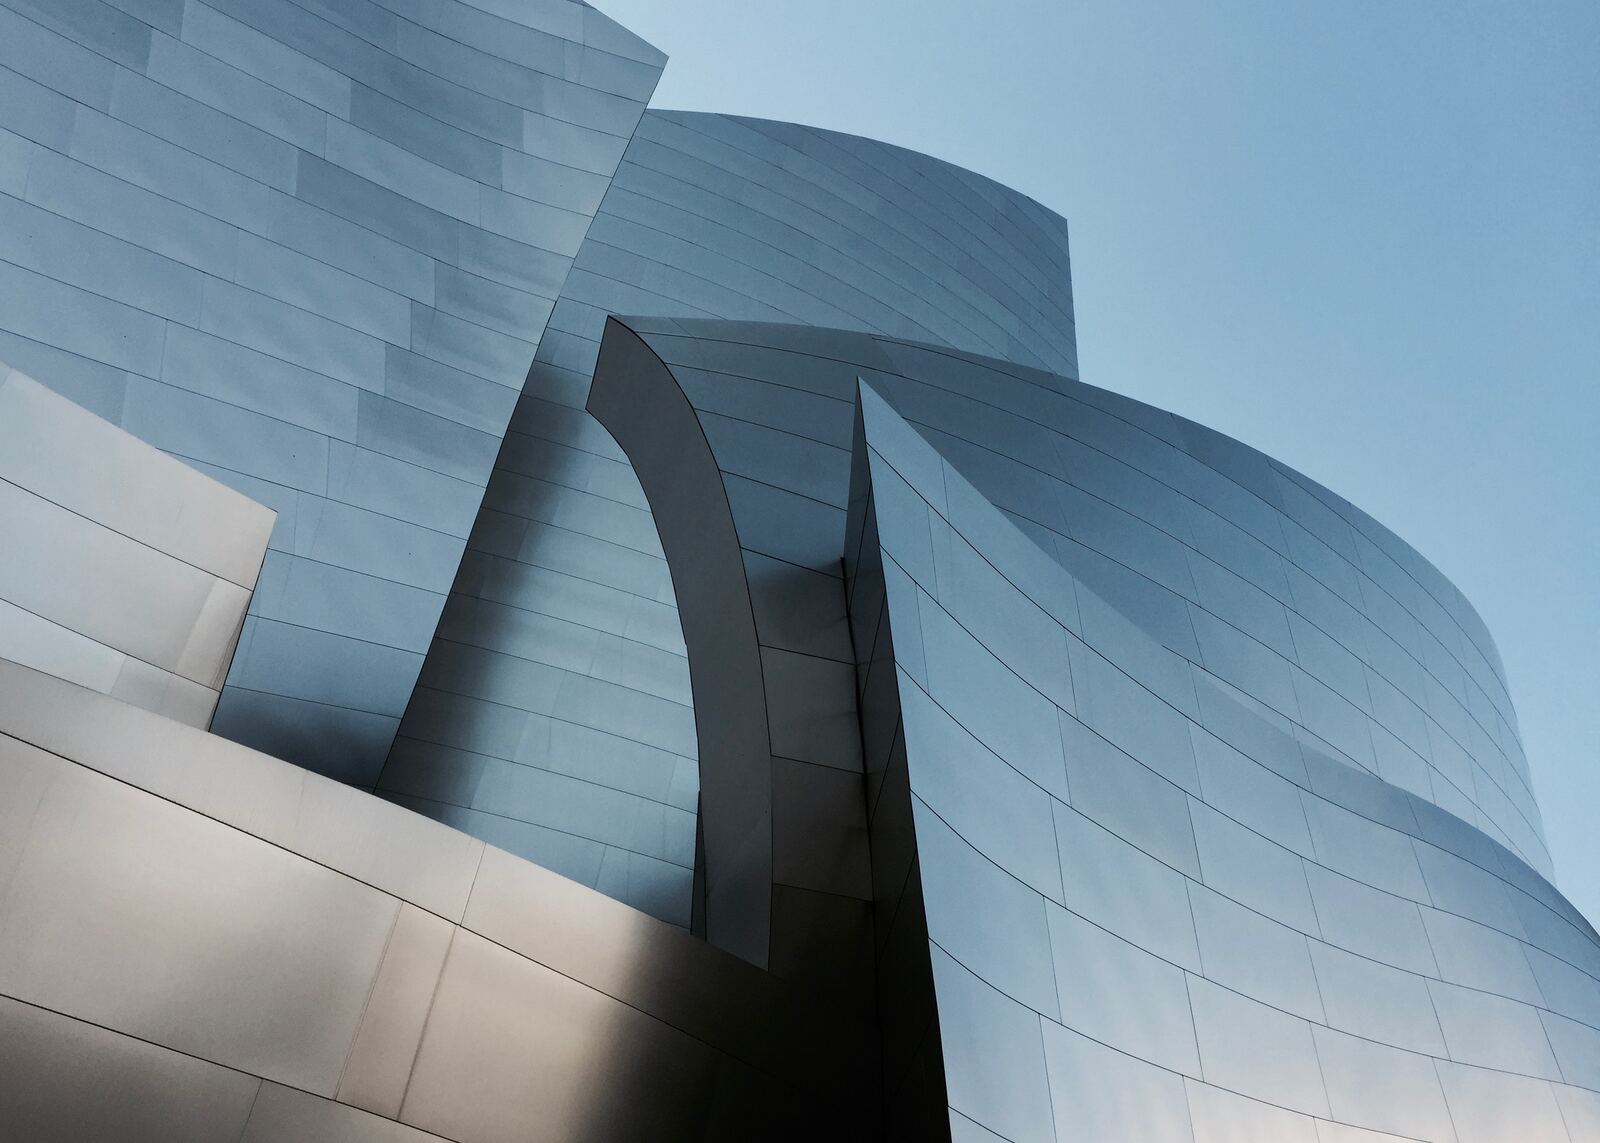 Image of Walt Disney Concert Hall by Team PhotoHound